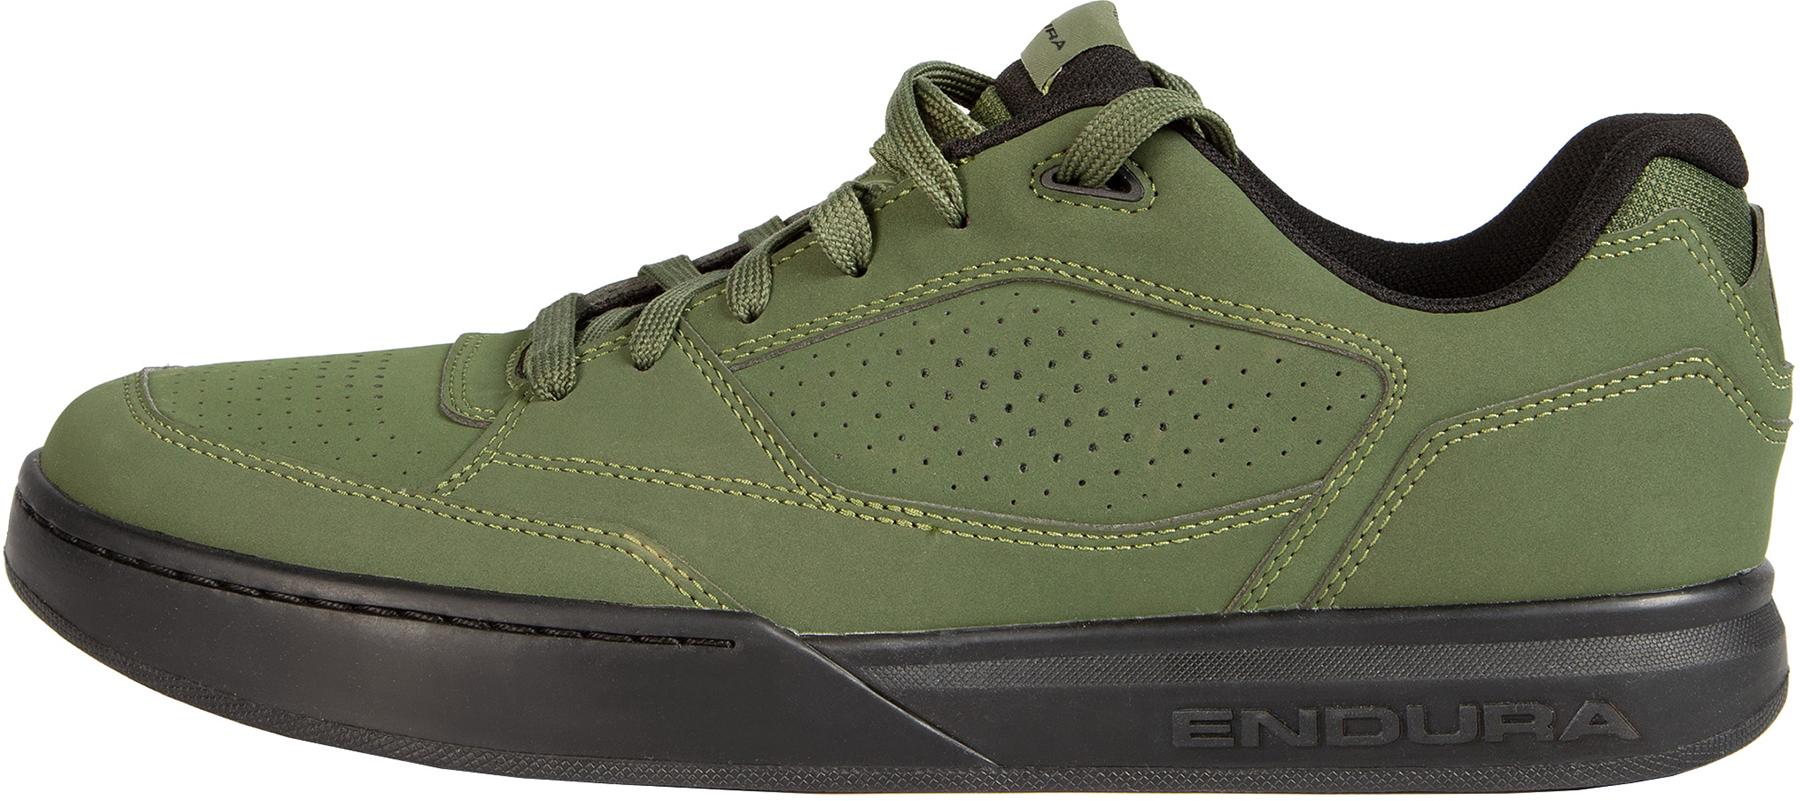 Endura Hummvee Flat Pedal Mtb Shoes - Olive Green